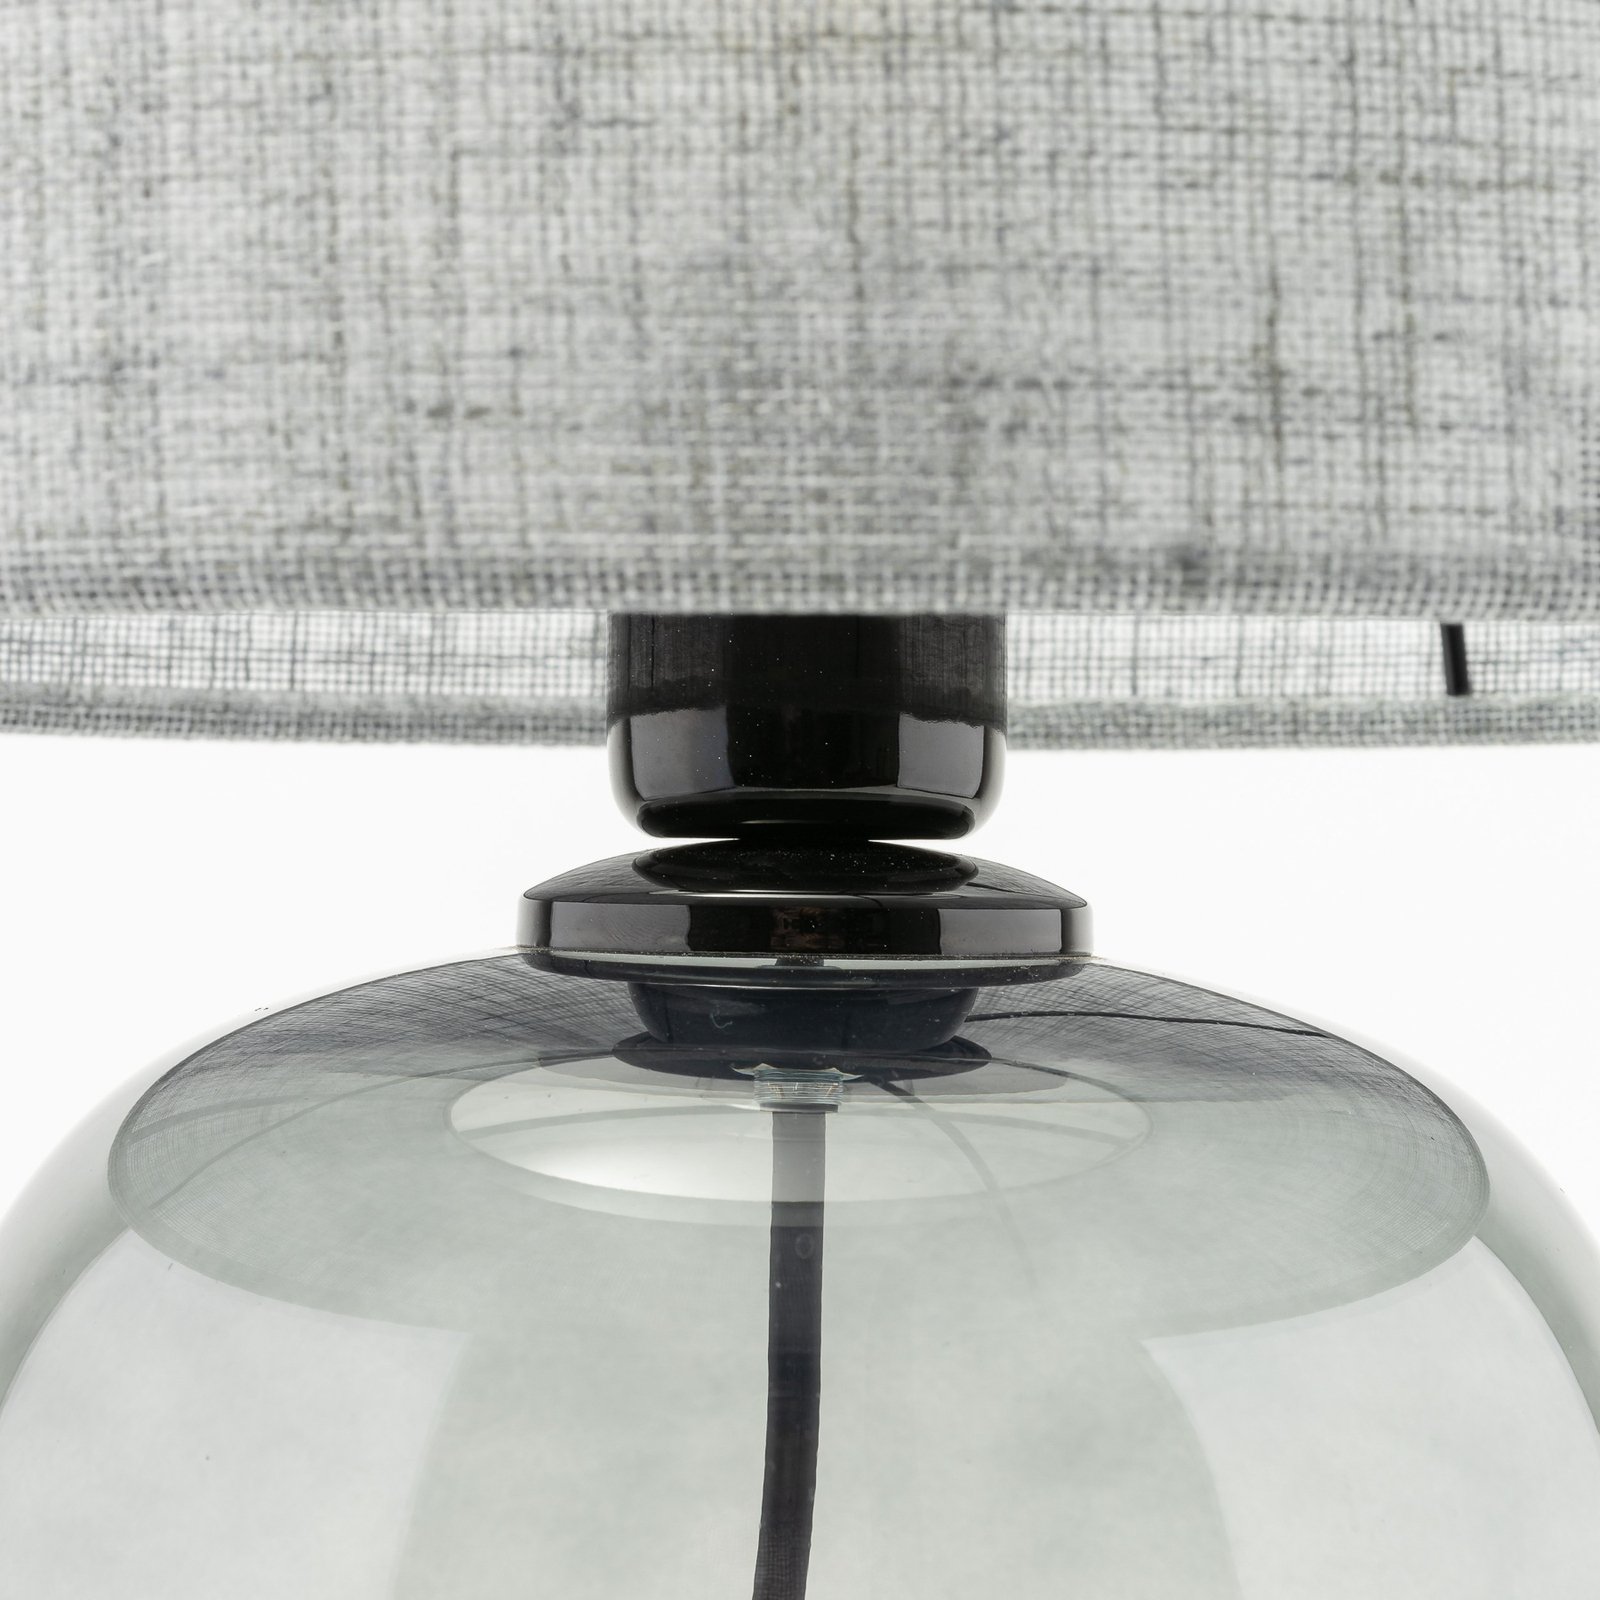 Melody bordlampe, højde 48 cm, røggråt glas, gråt stof